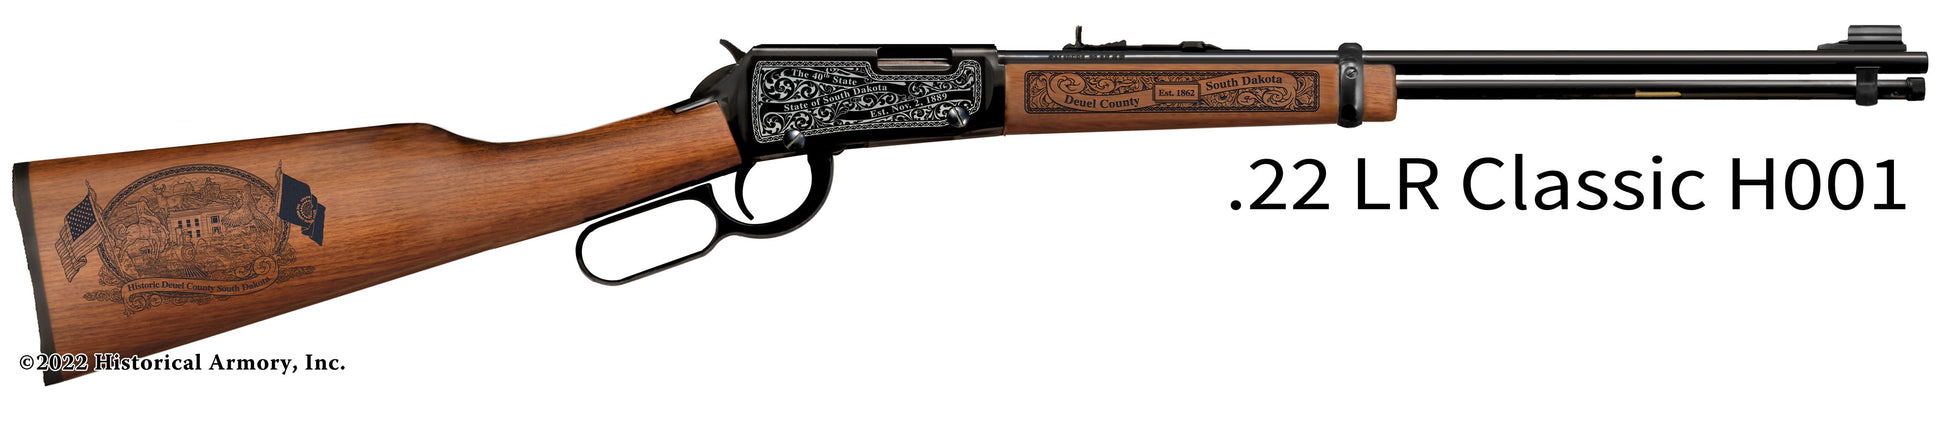 Deuel County South Dakota Engraved Henry H001 Rifle